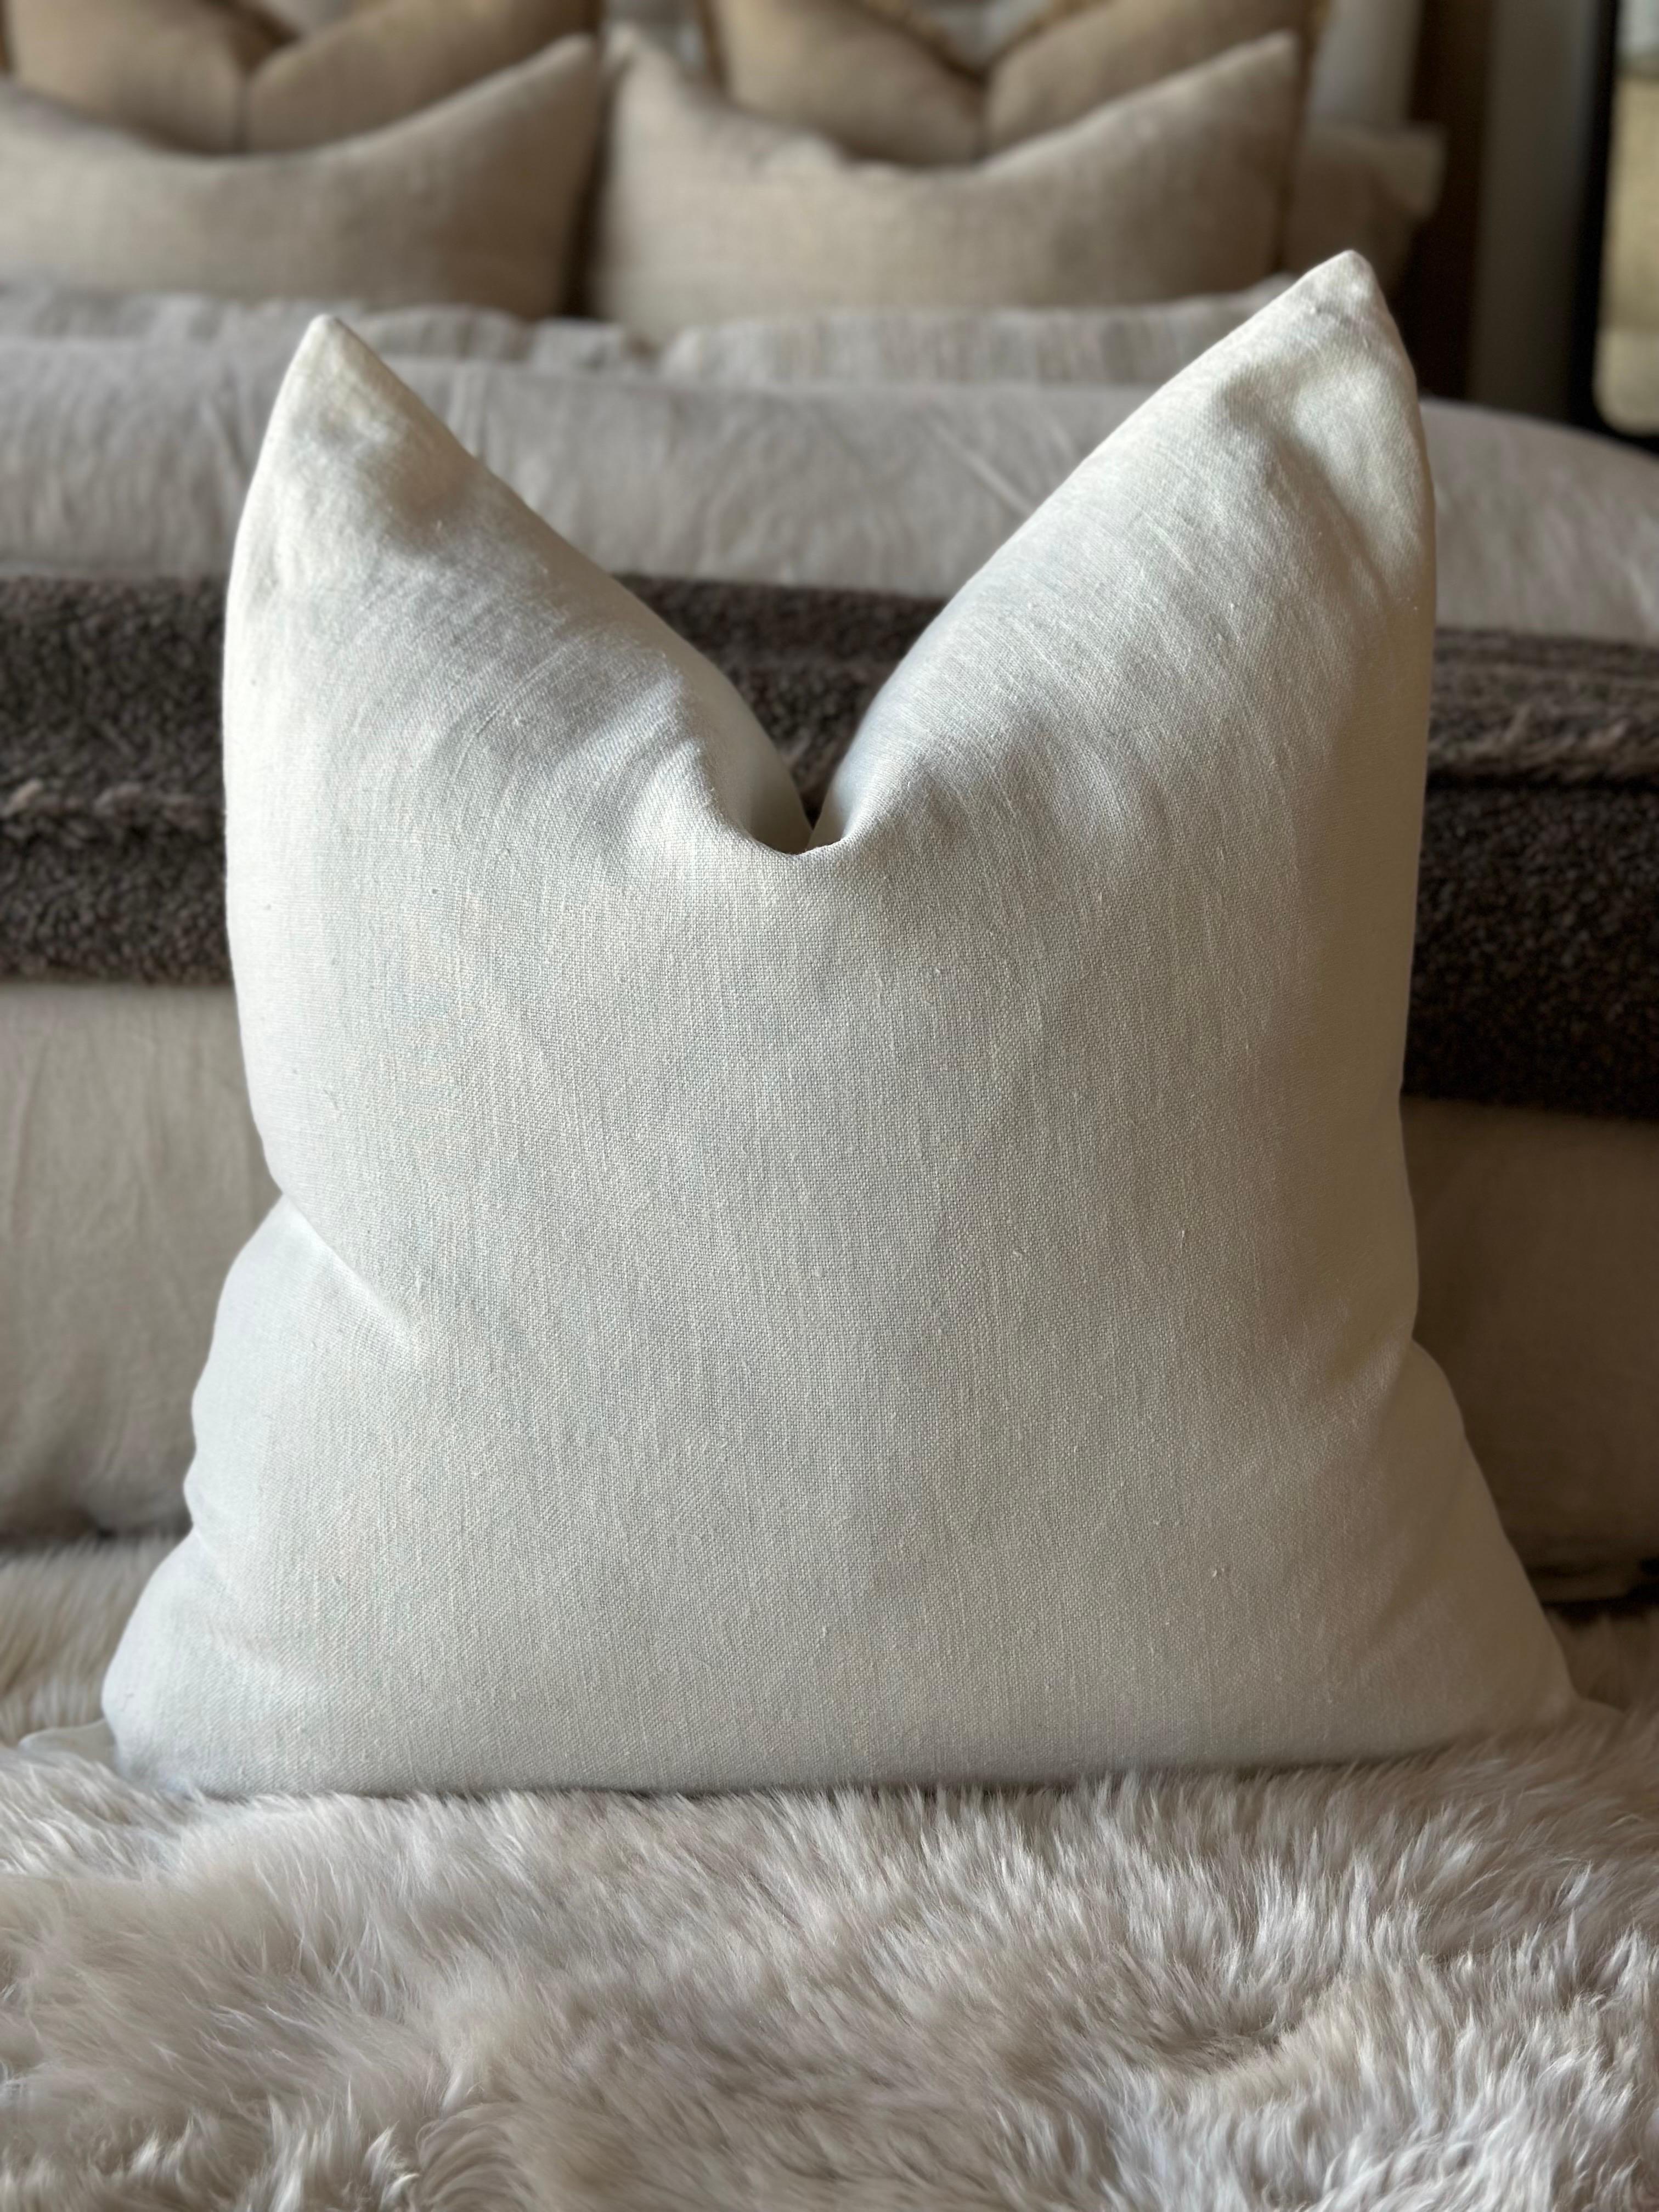 100% Belgian Linen Pillow Cover with Hidden Zipper In New Condition For Sale In Brea, CA